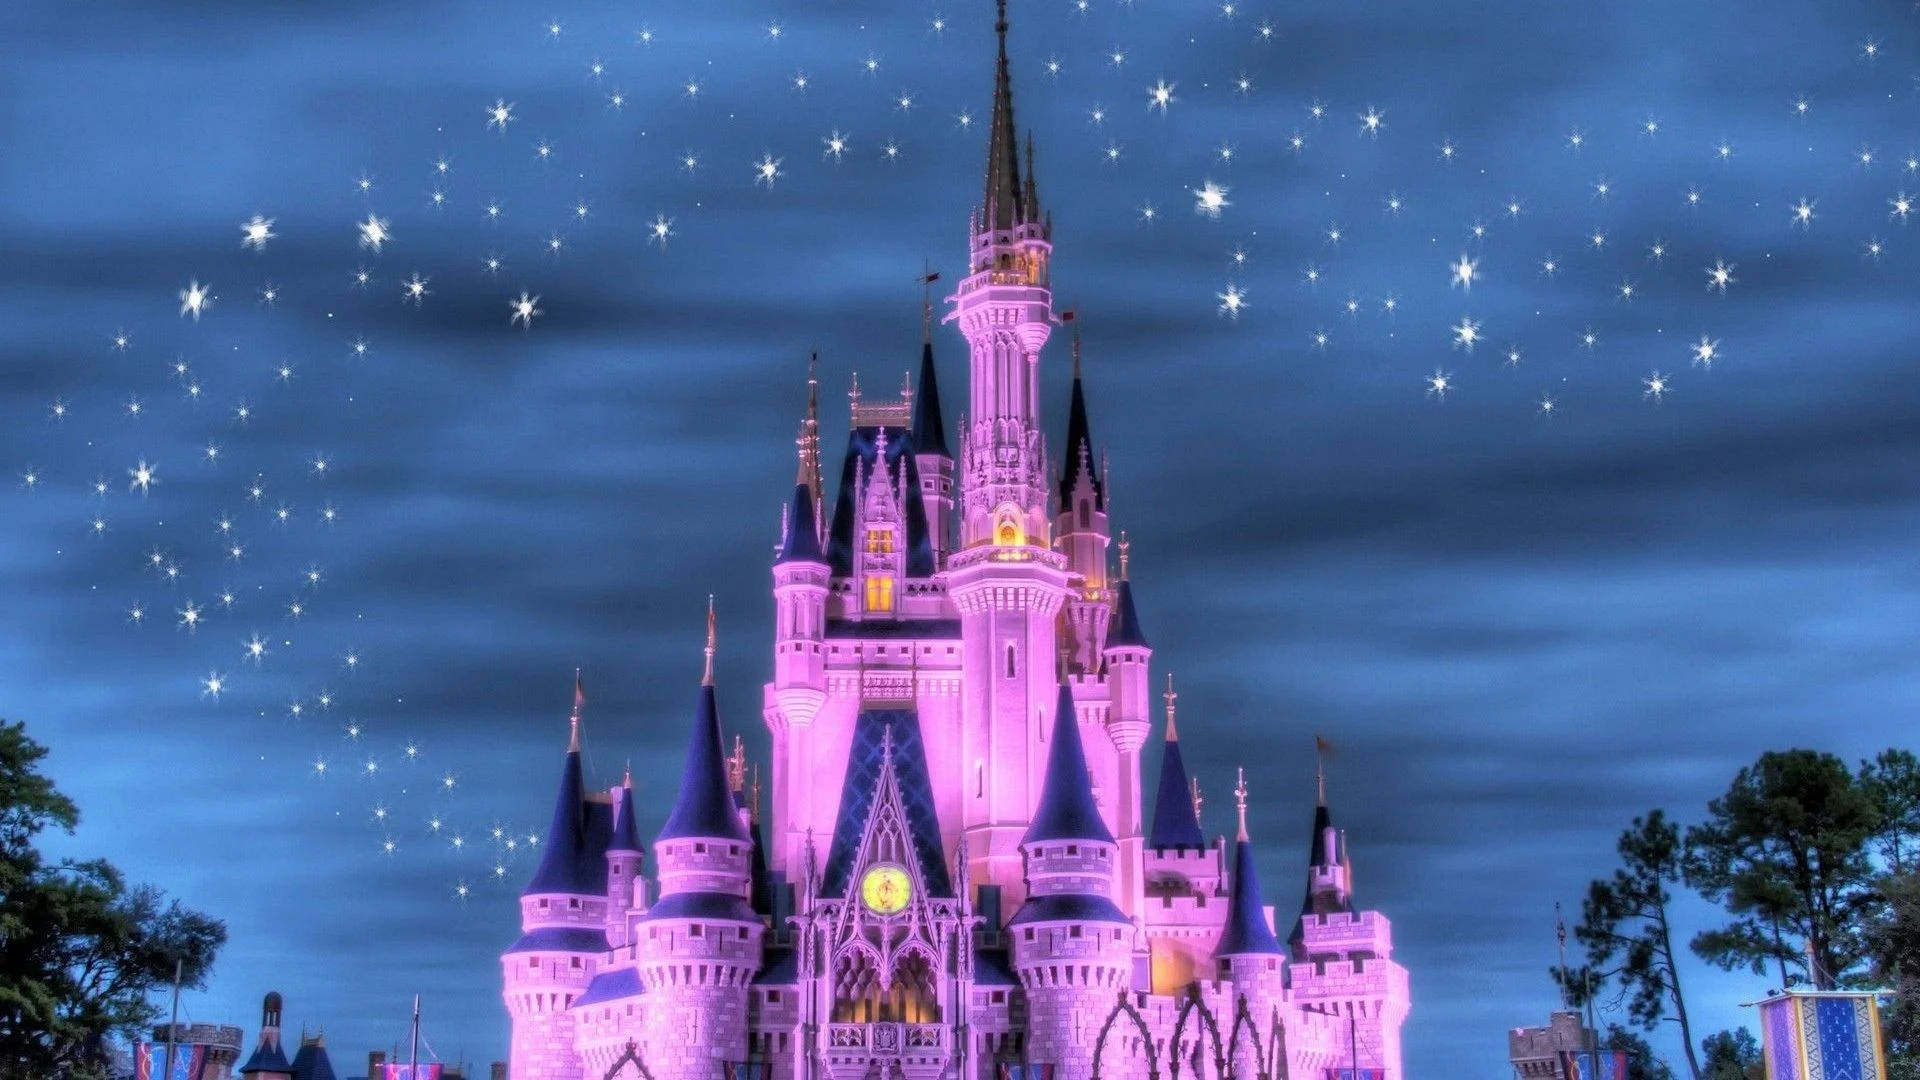 Pink Castle Disney Desktop Wallpaper